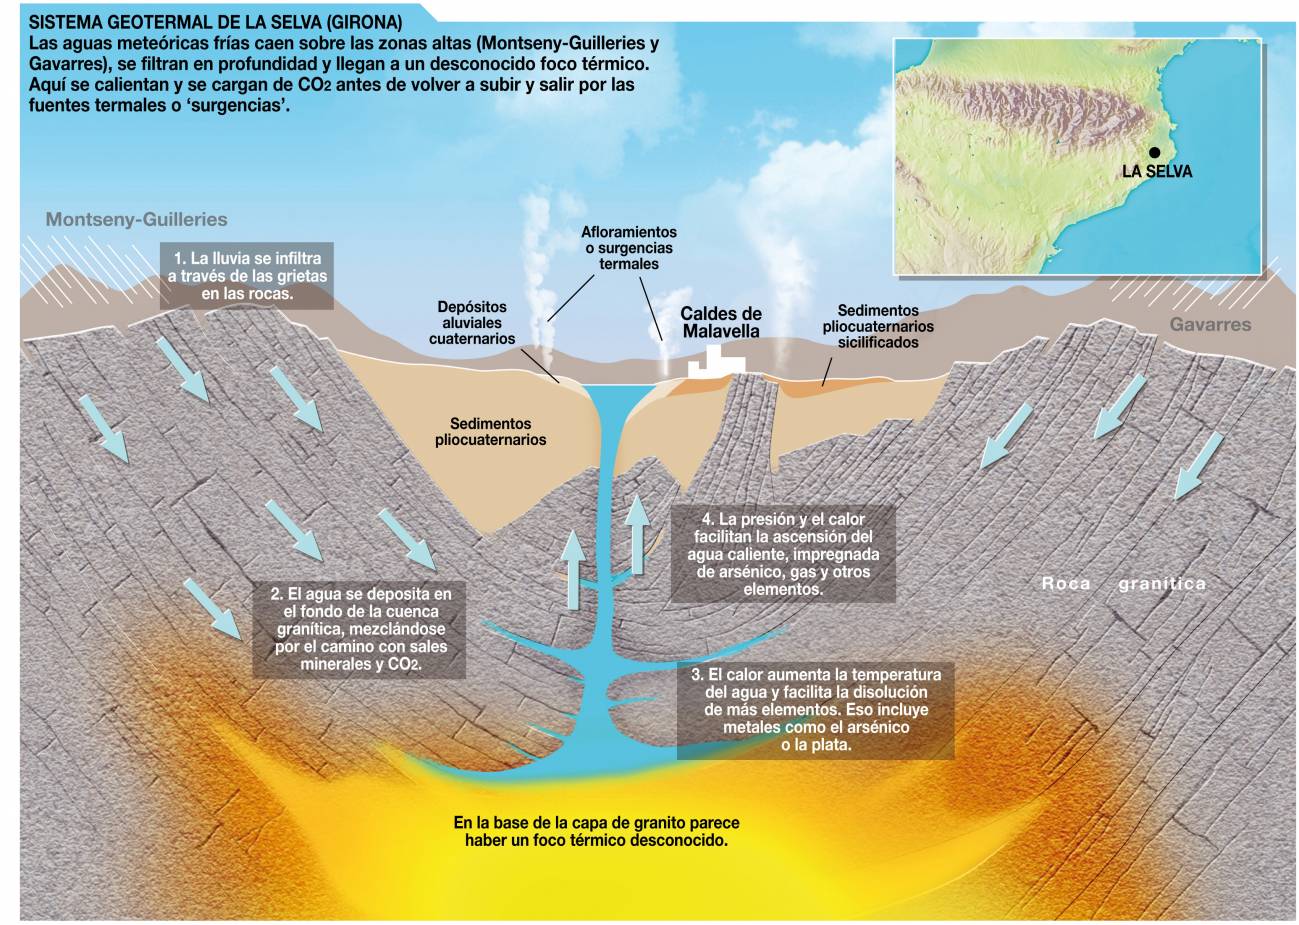 Modelo de funcionamiento del sistema geotermal de La Selva (Girona). Imagen: SINC